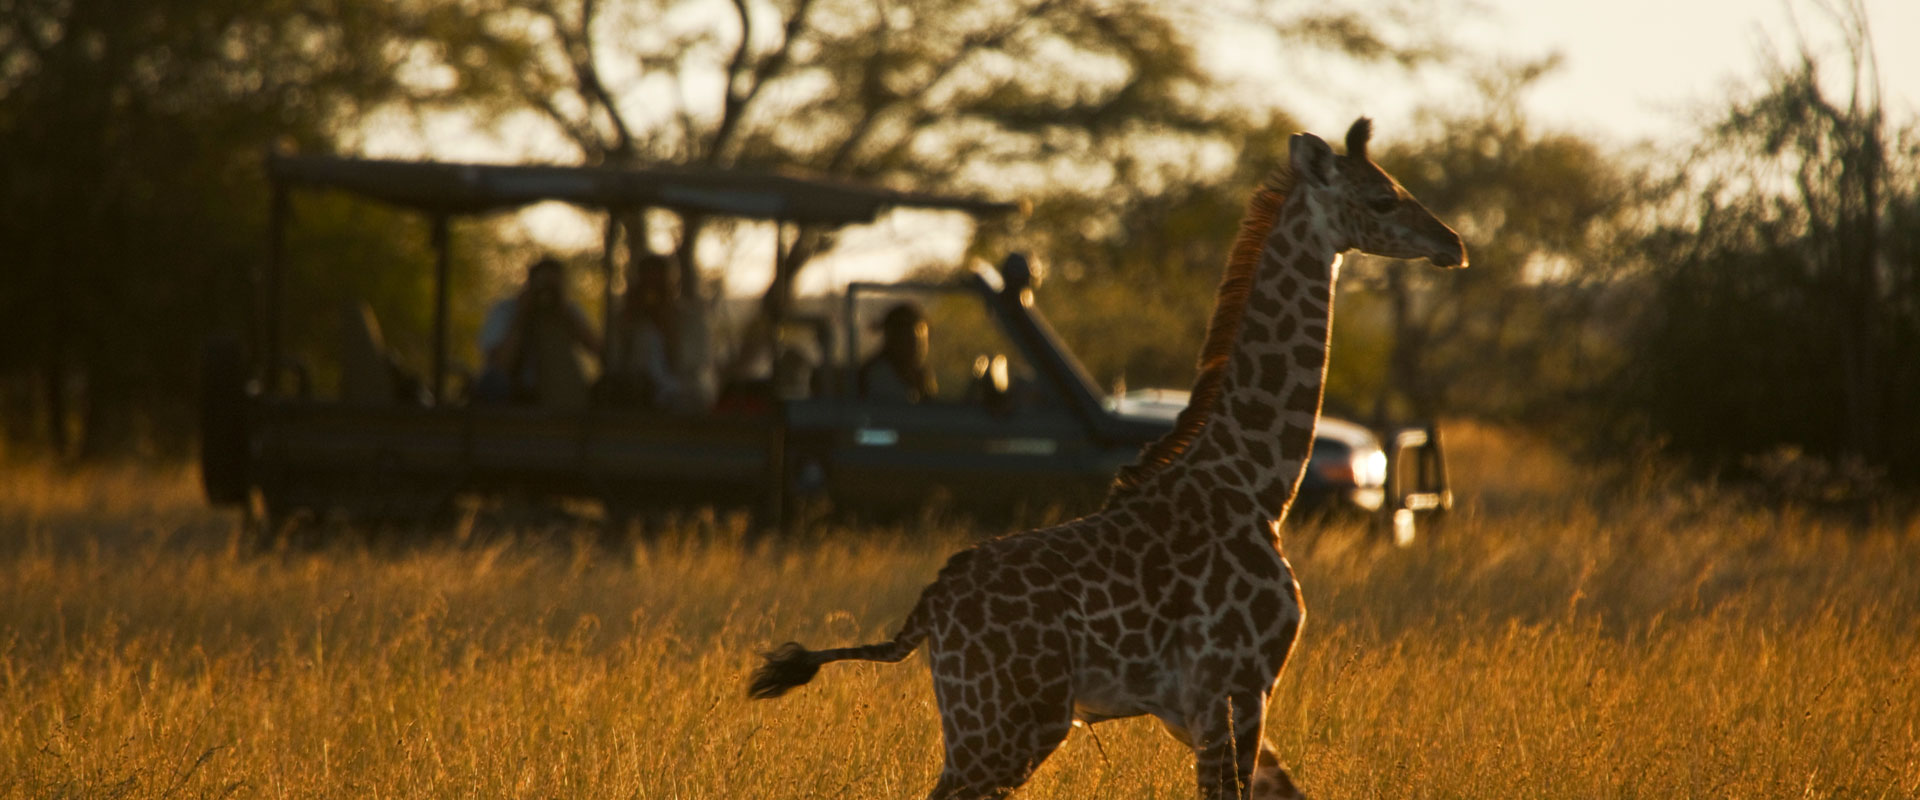 Kenya Safari Inspiration